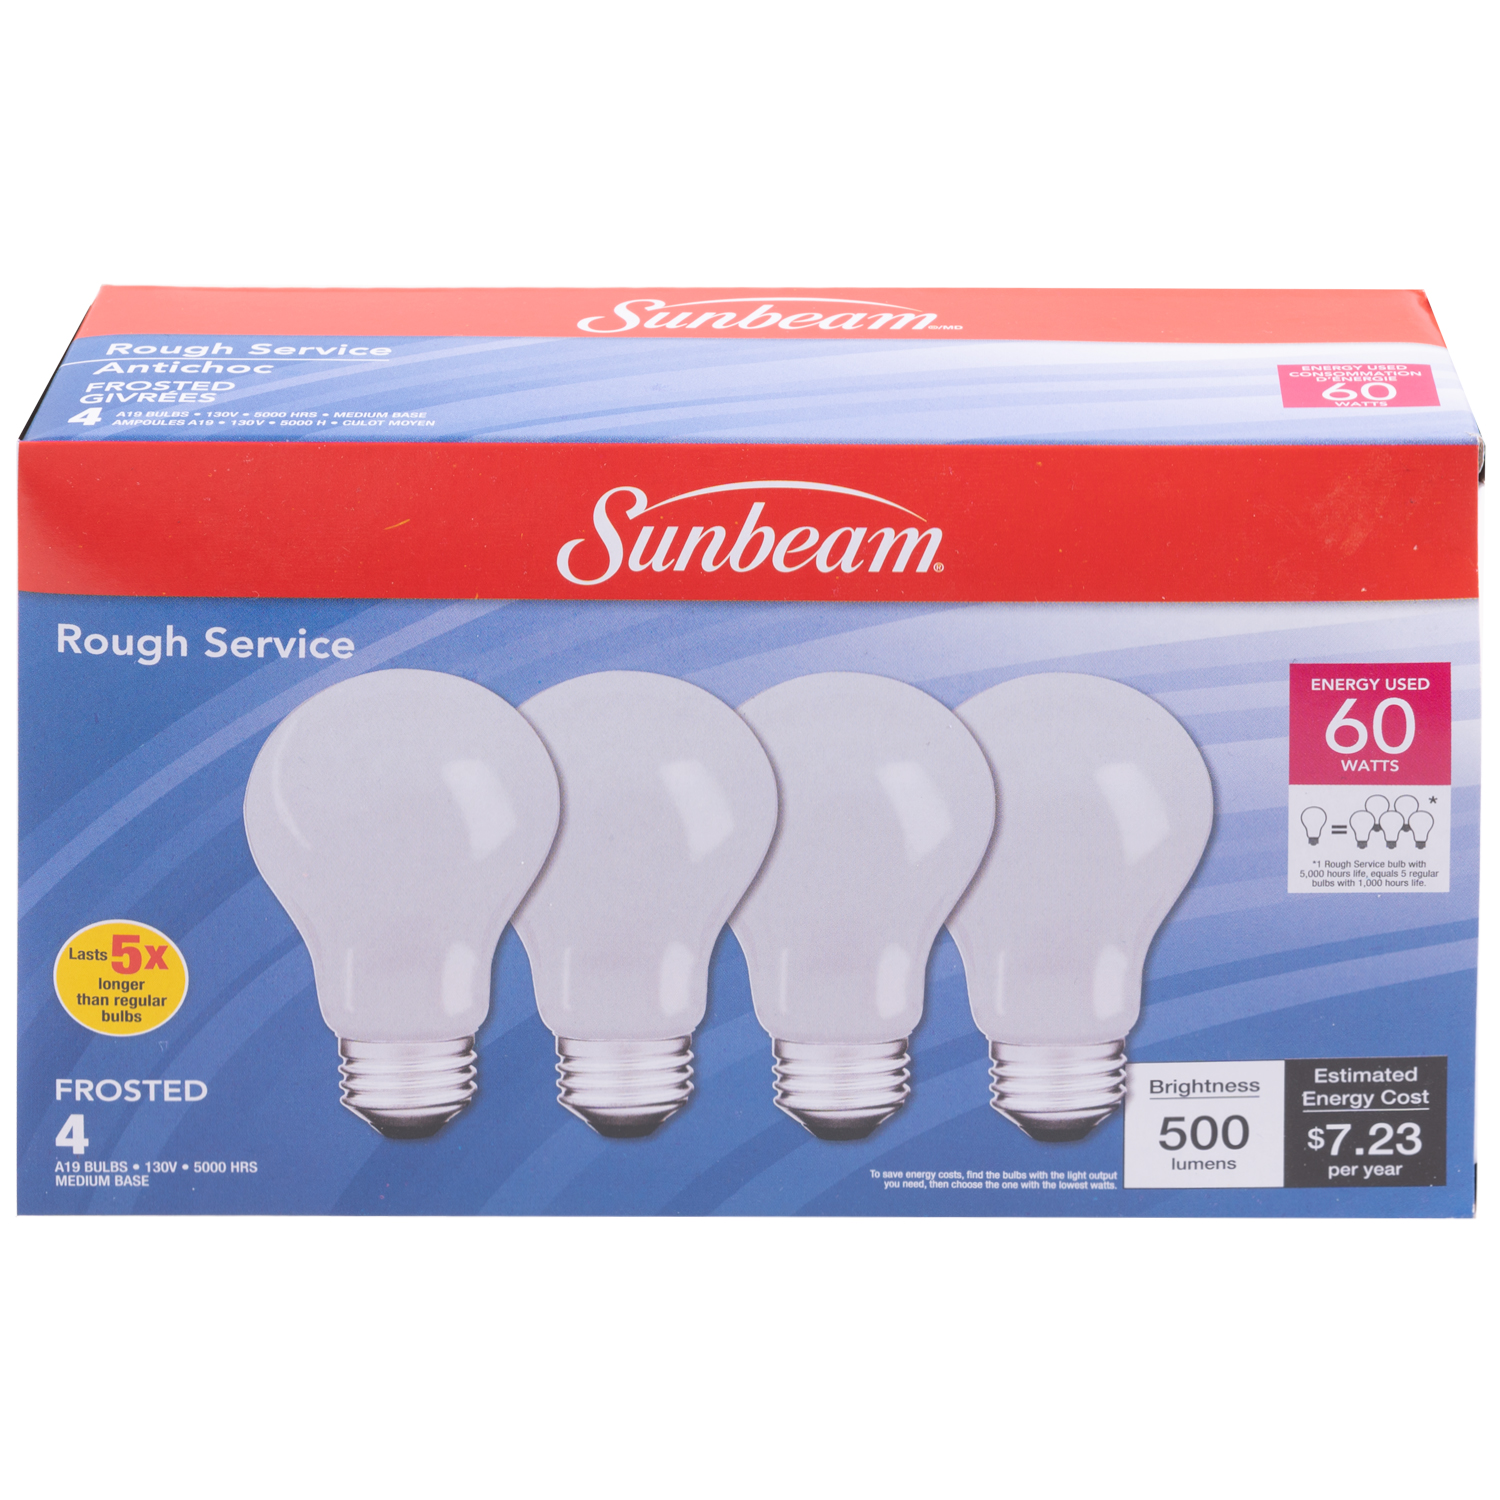 Sunbeam - Rough Service frosted light bulbs, 60W, pk. of 4